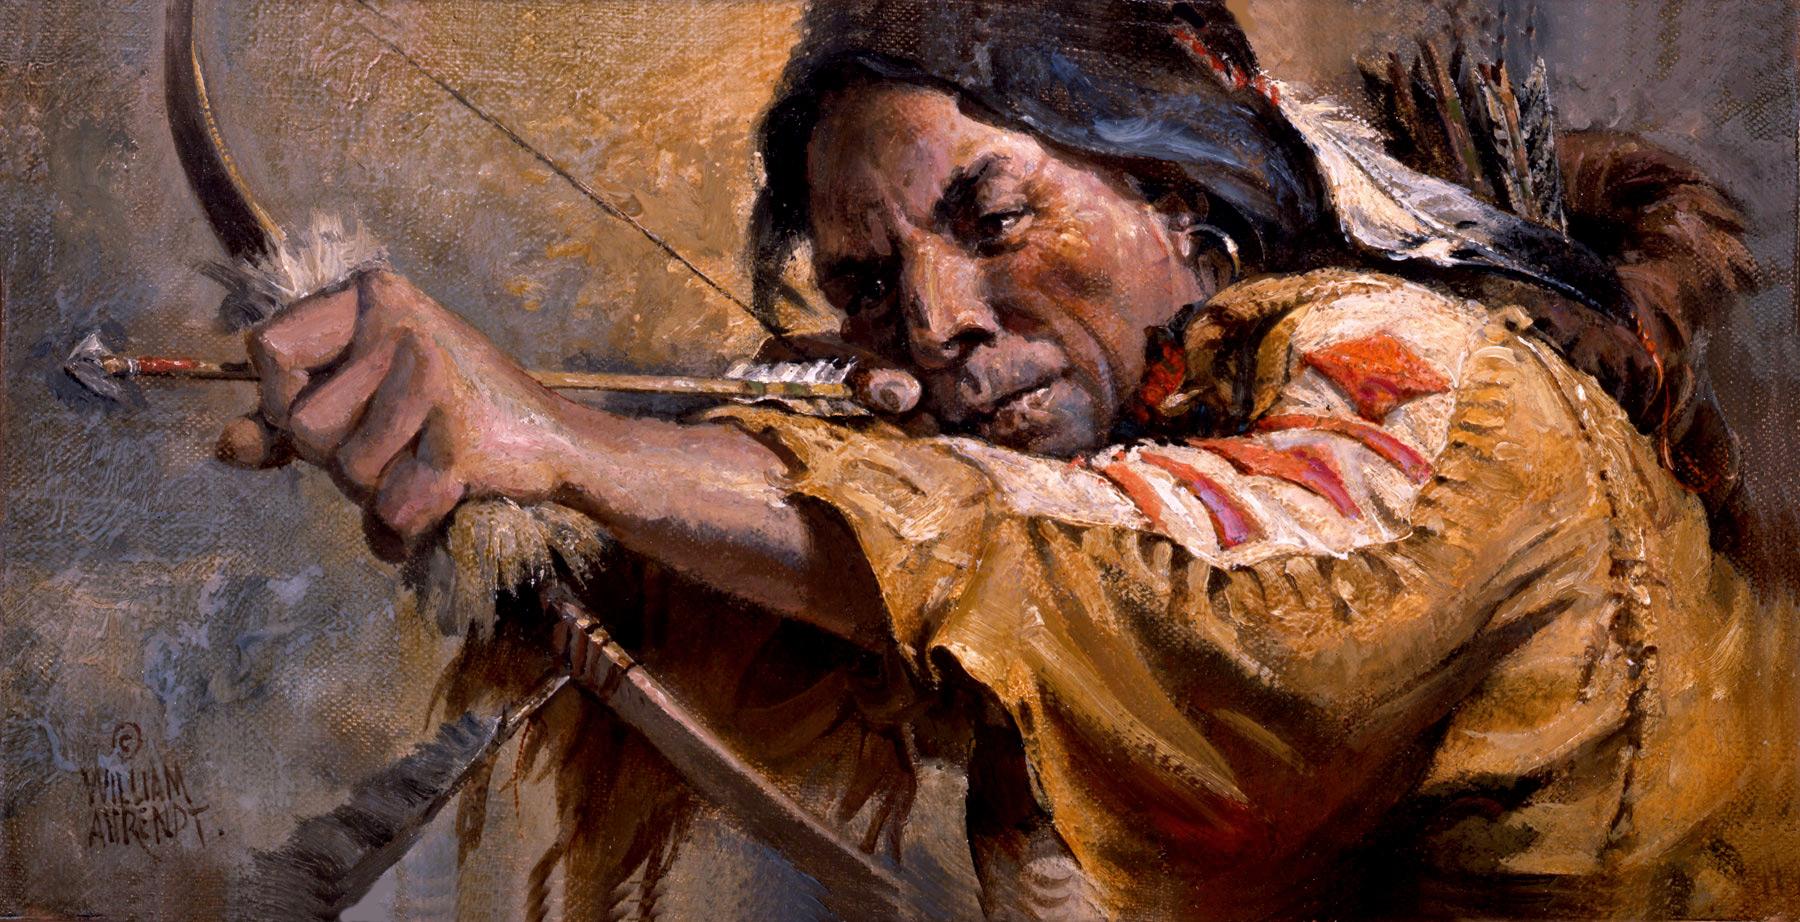 Native American Wallpaper And Screensavers Qiqru Org Showim